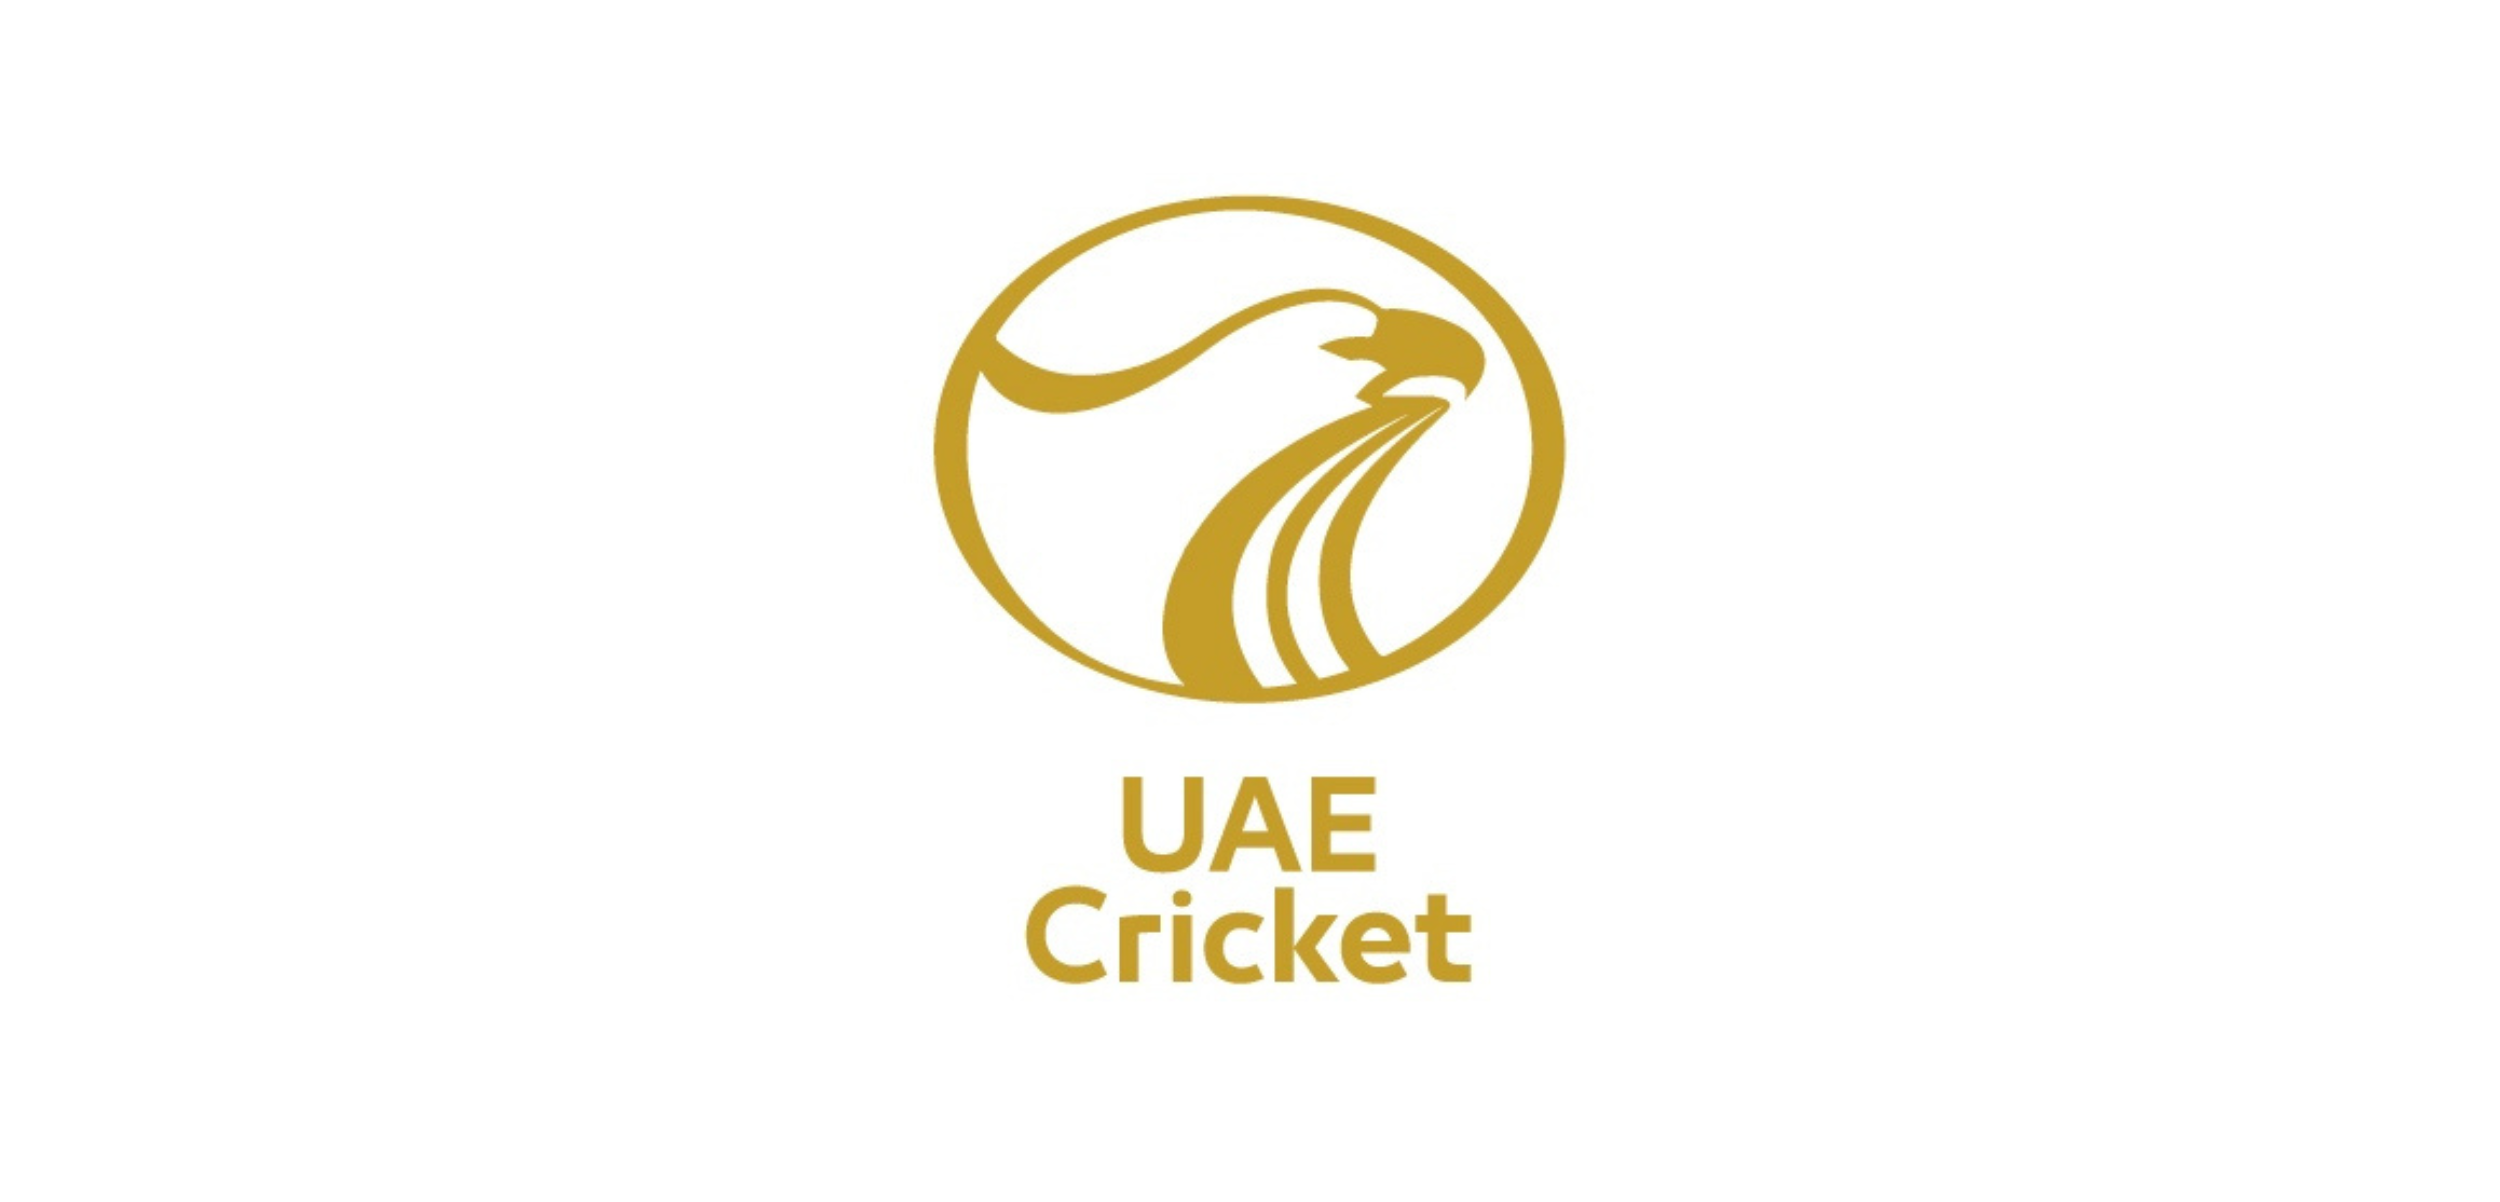 ECB announce the team that will represent the UAE at UAE v Nepal ODI series